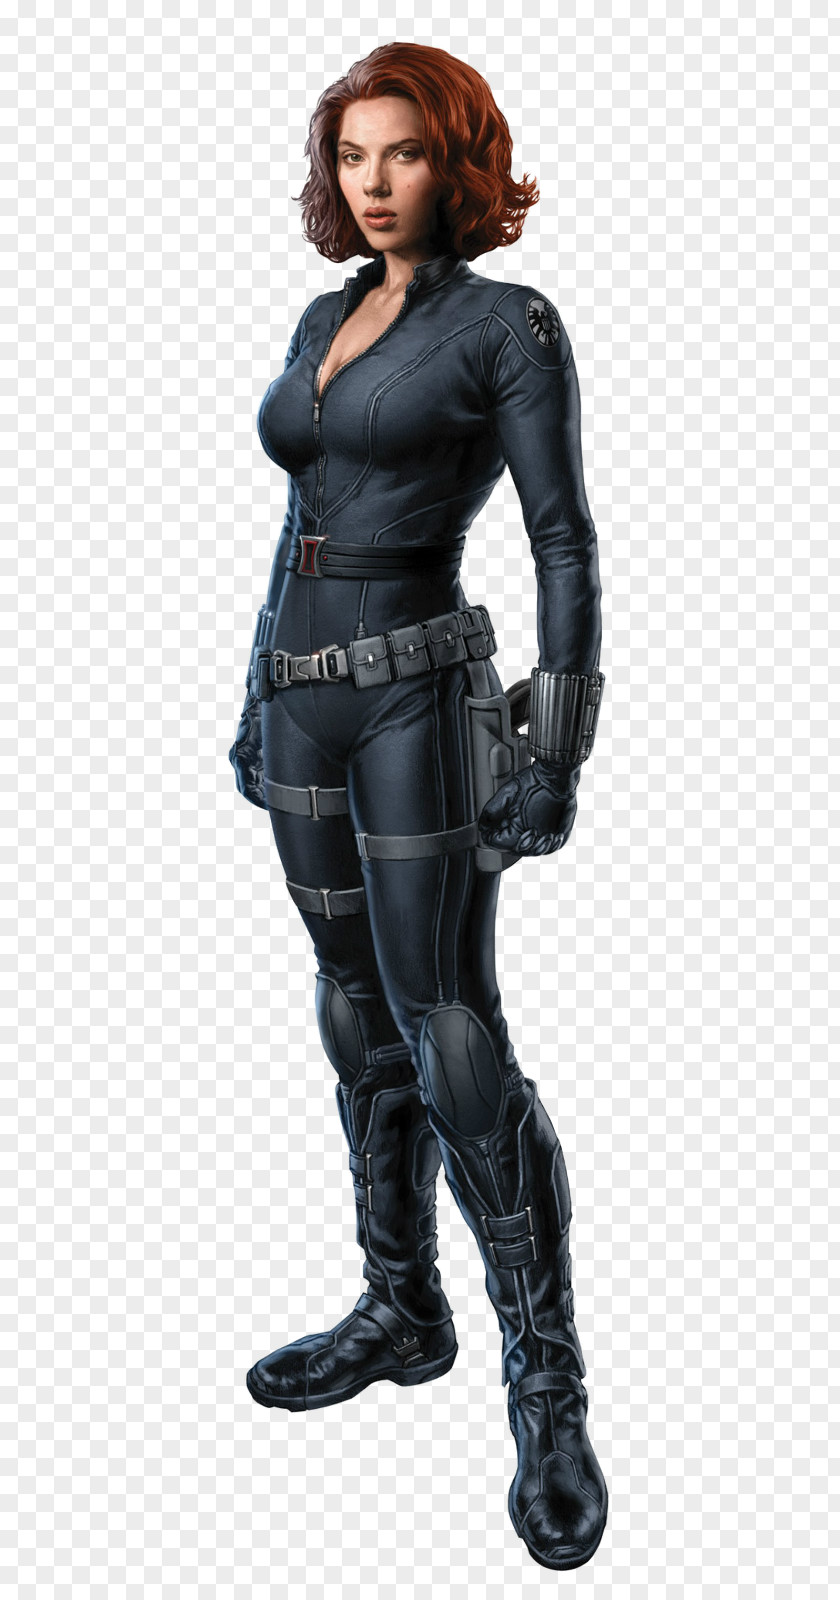 Blackwidow Scarlett Johansson Marvel Avengers Assemble Black Widow Thor Hulk PNG